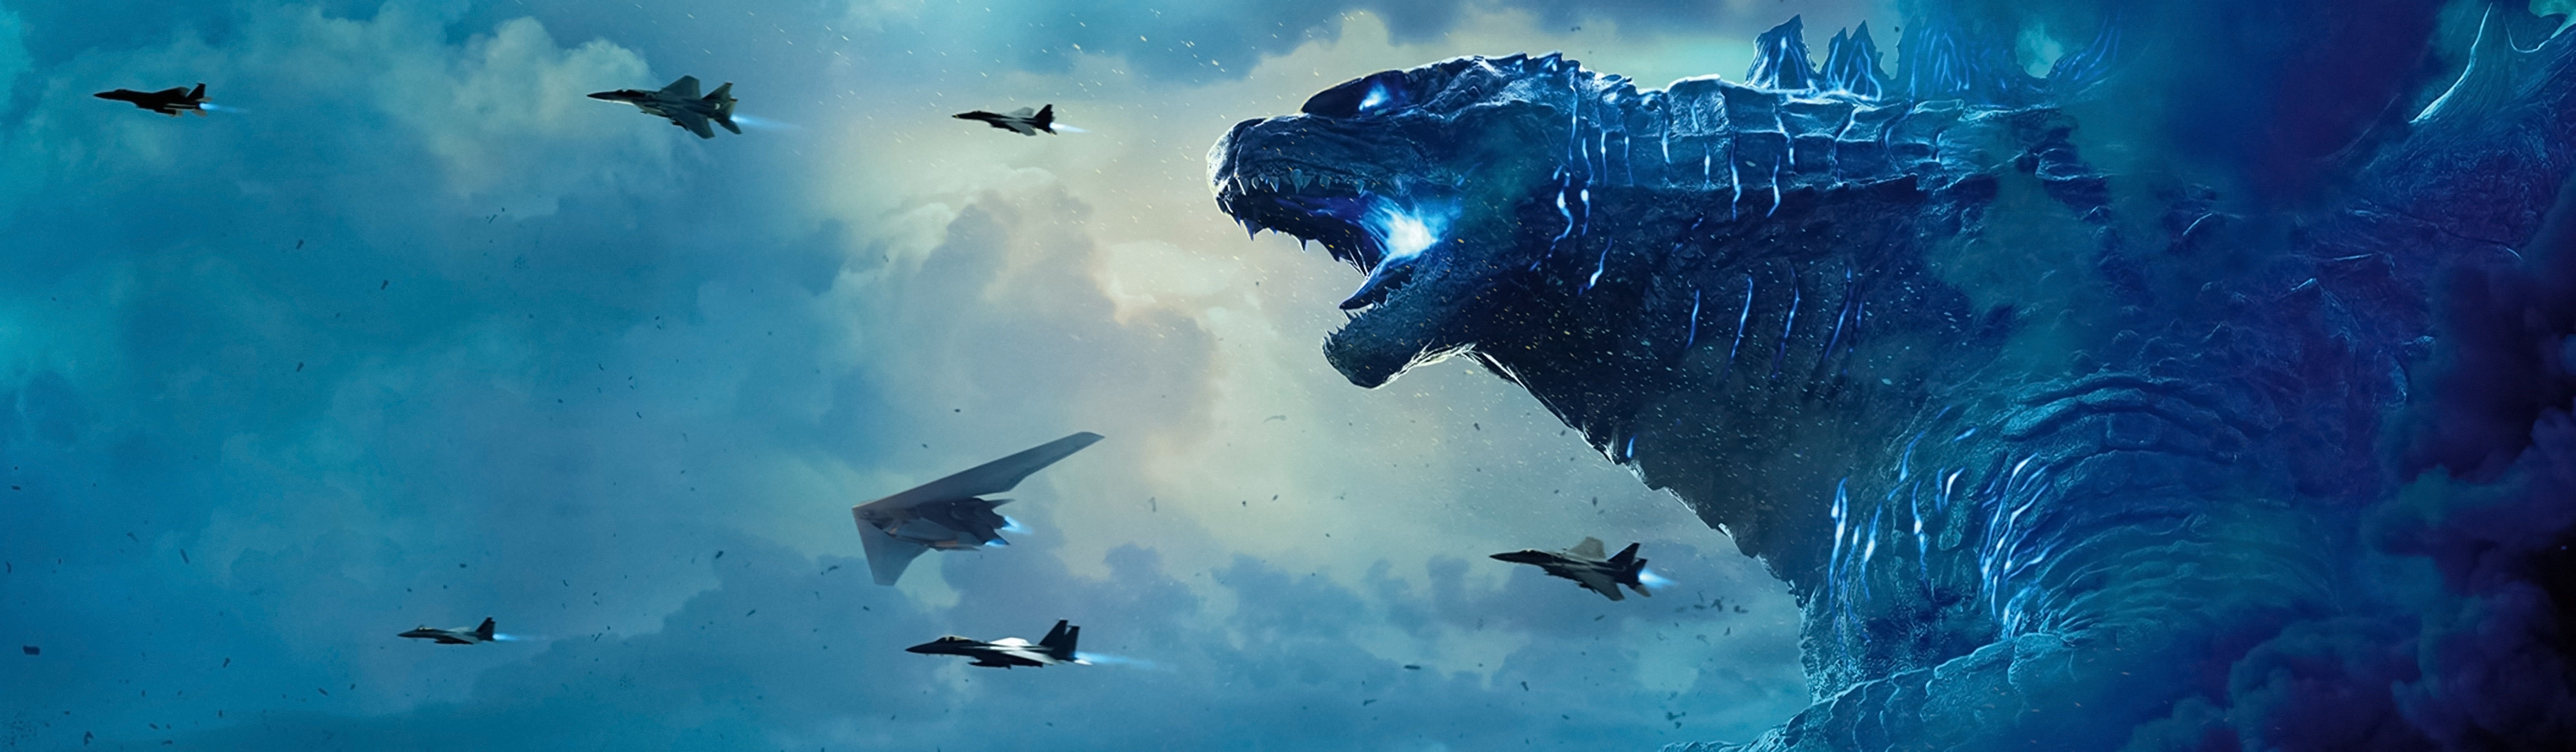 Movie Godzilla: King of the Monsters #Godzilla K #wallpaper #hdwallpaper # desktop. Godzilla wallpaper, Monster, HD wallpaper